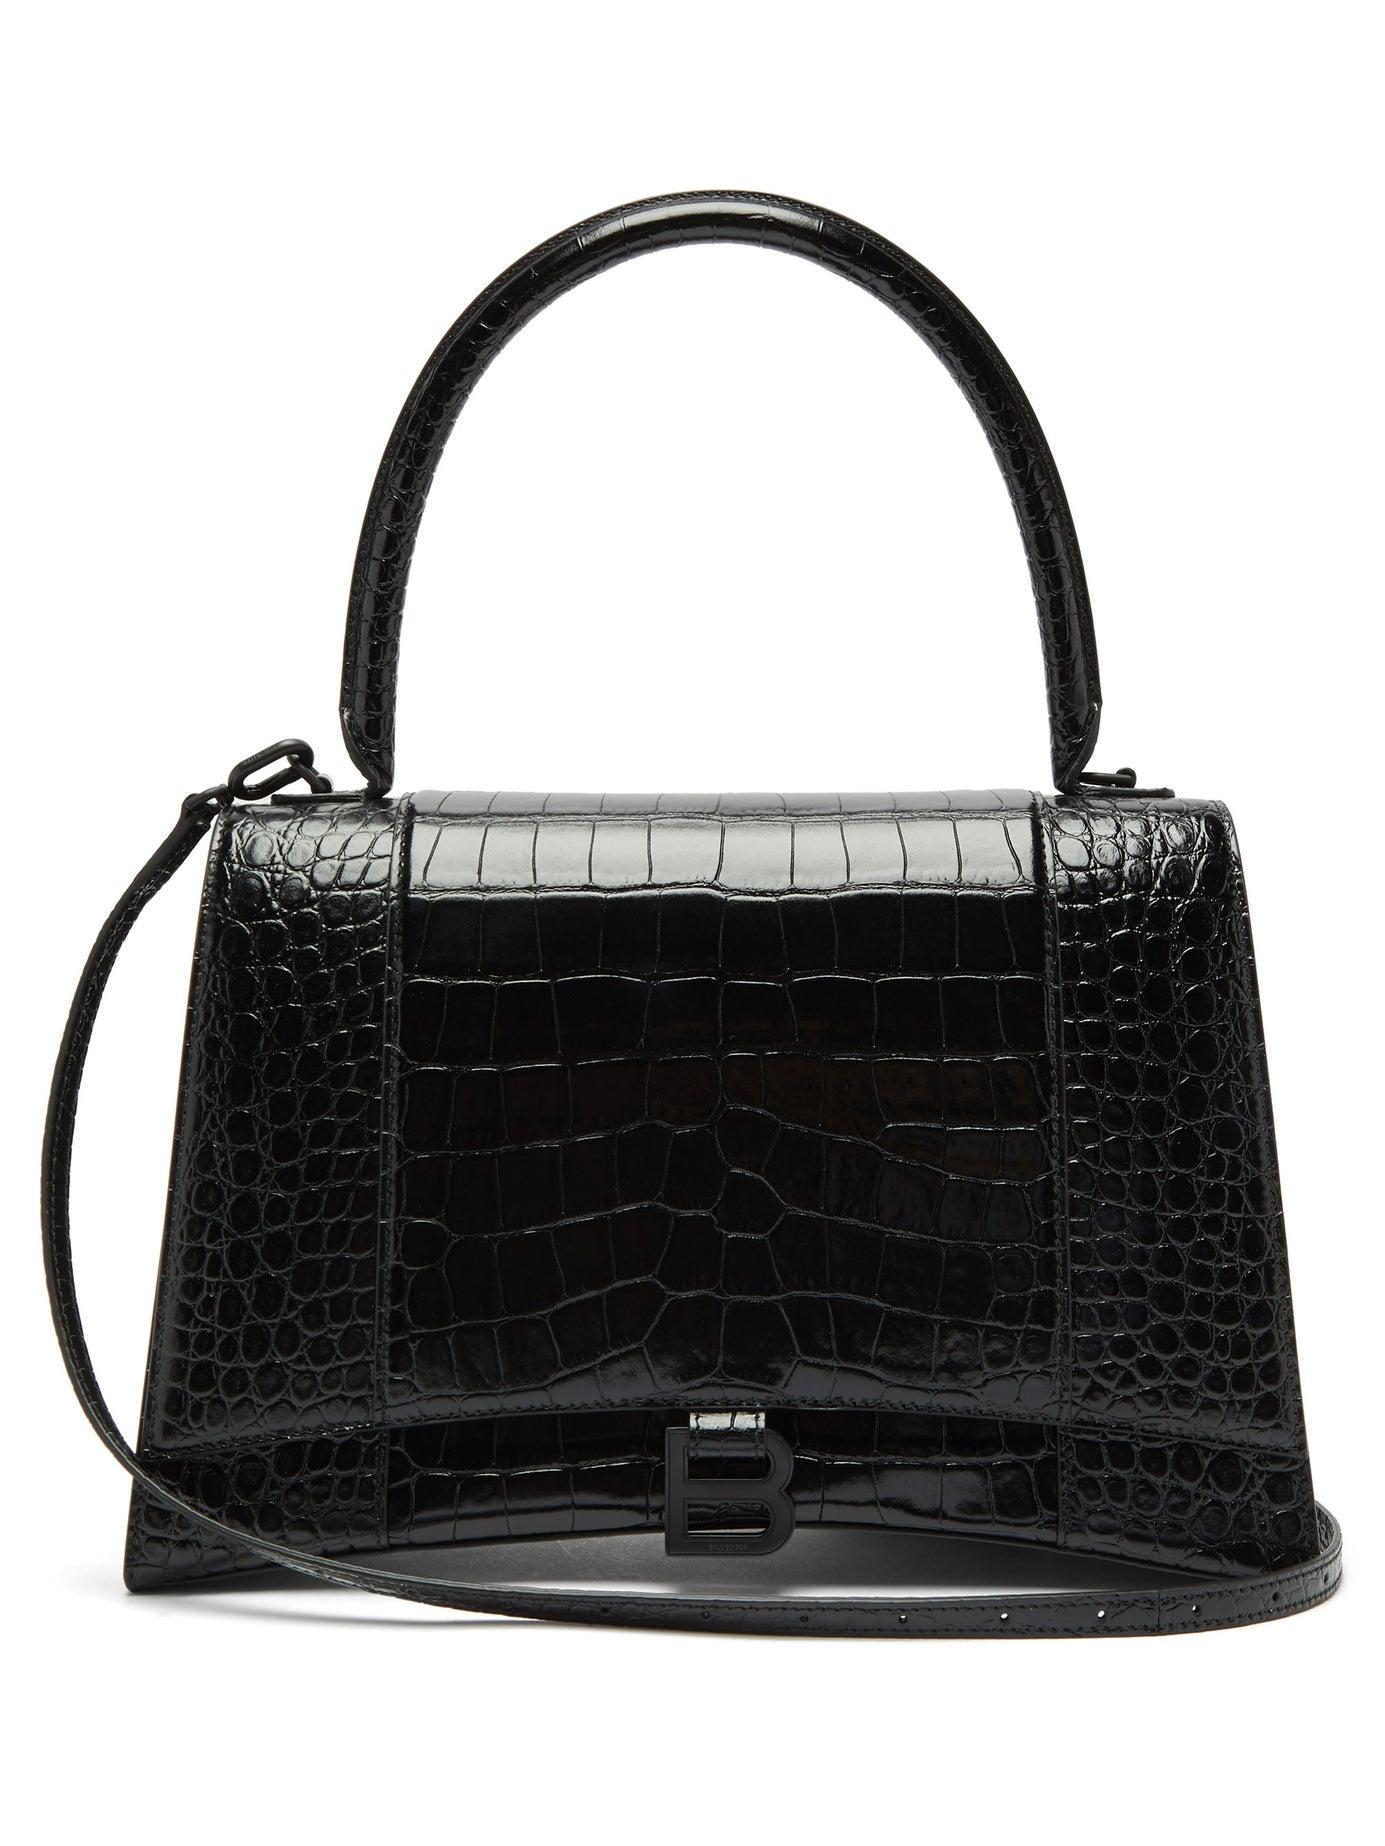 Balenciaga Hourglass Medium Crocodile Embossed Leather Bag in Black | Lyst